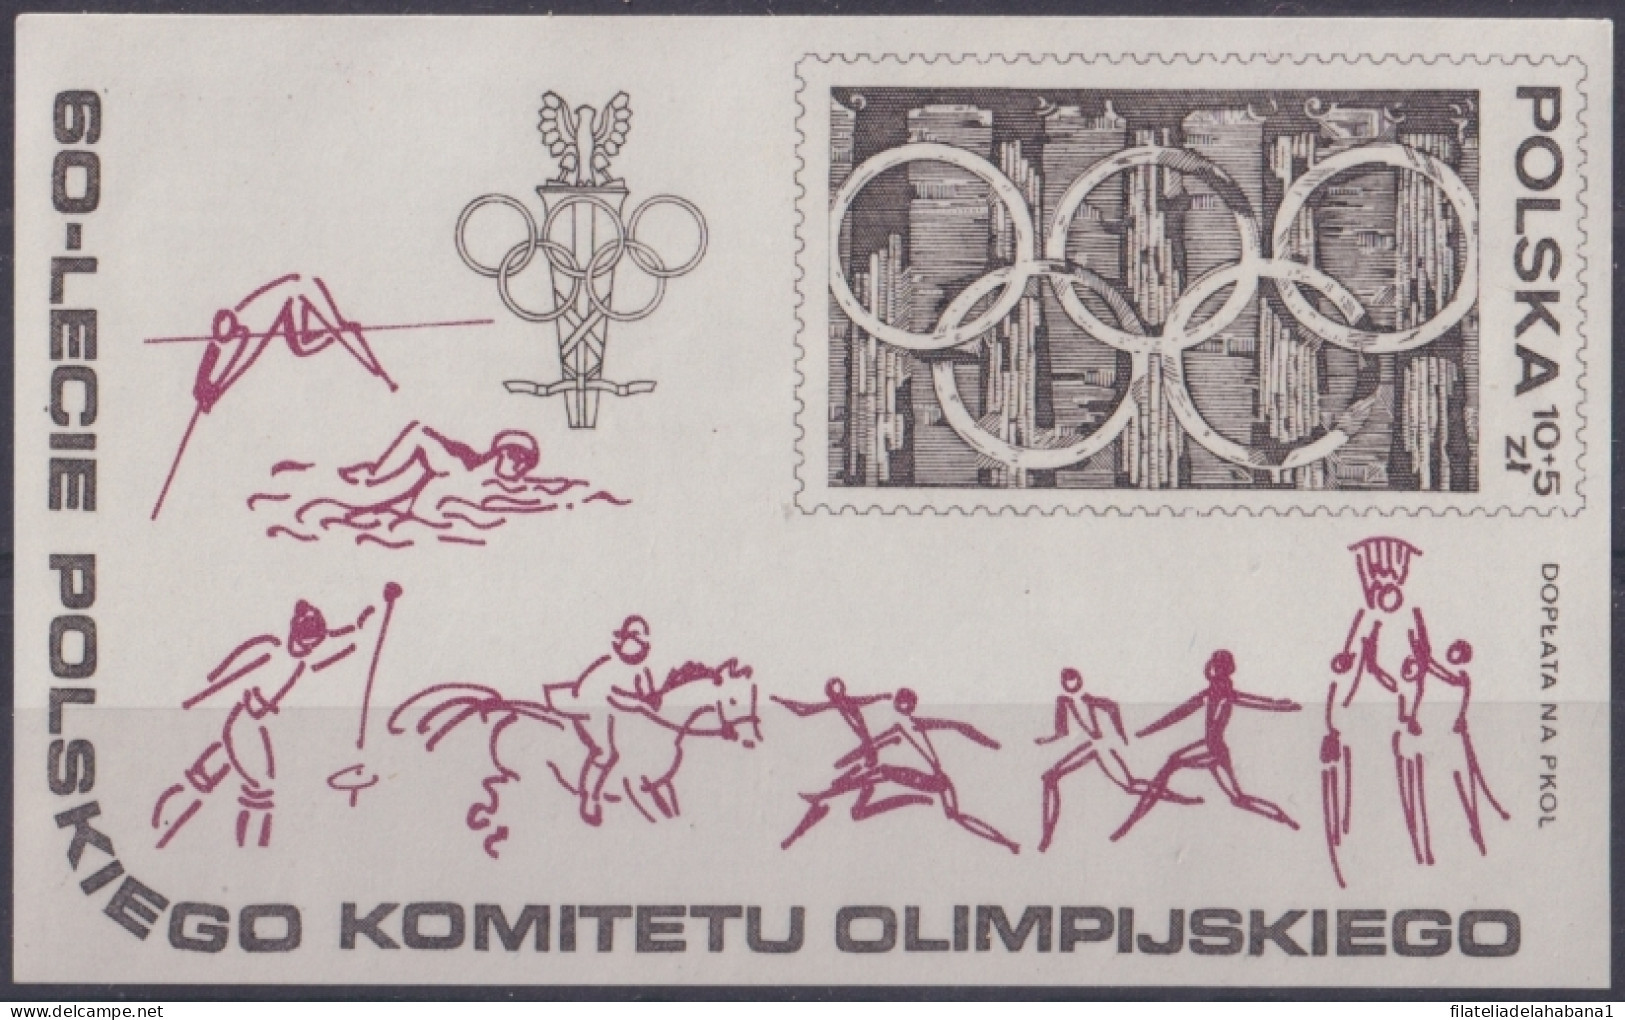 F-EX50088 POLAND MNH 1979 SPORT 60th ANNIV OLYMPIC GAMES SOCIETY.     - Sommer 1980: Moskau